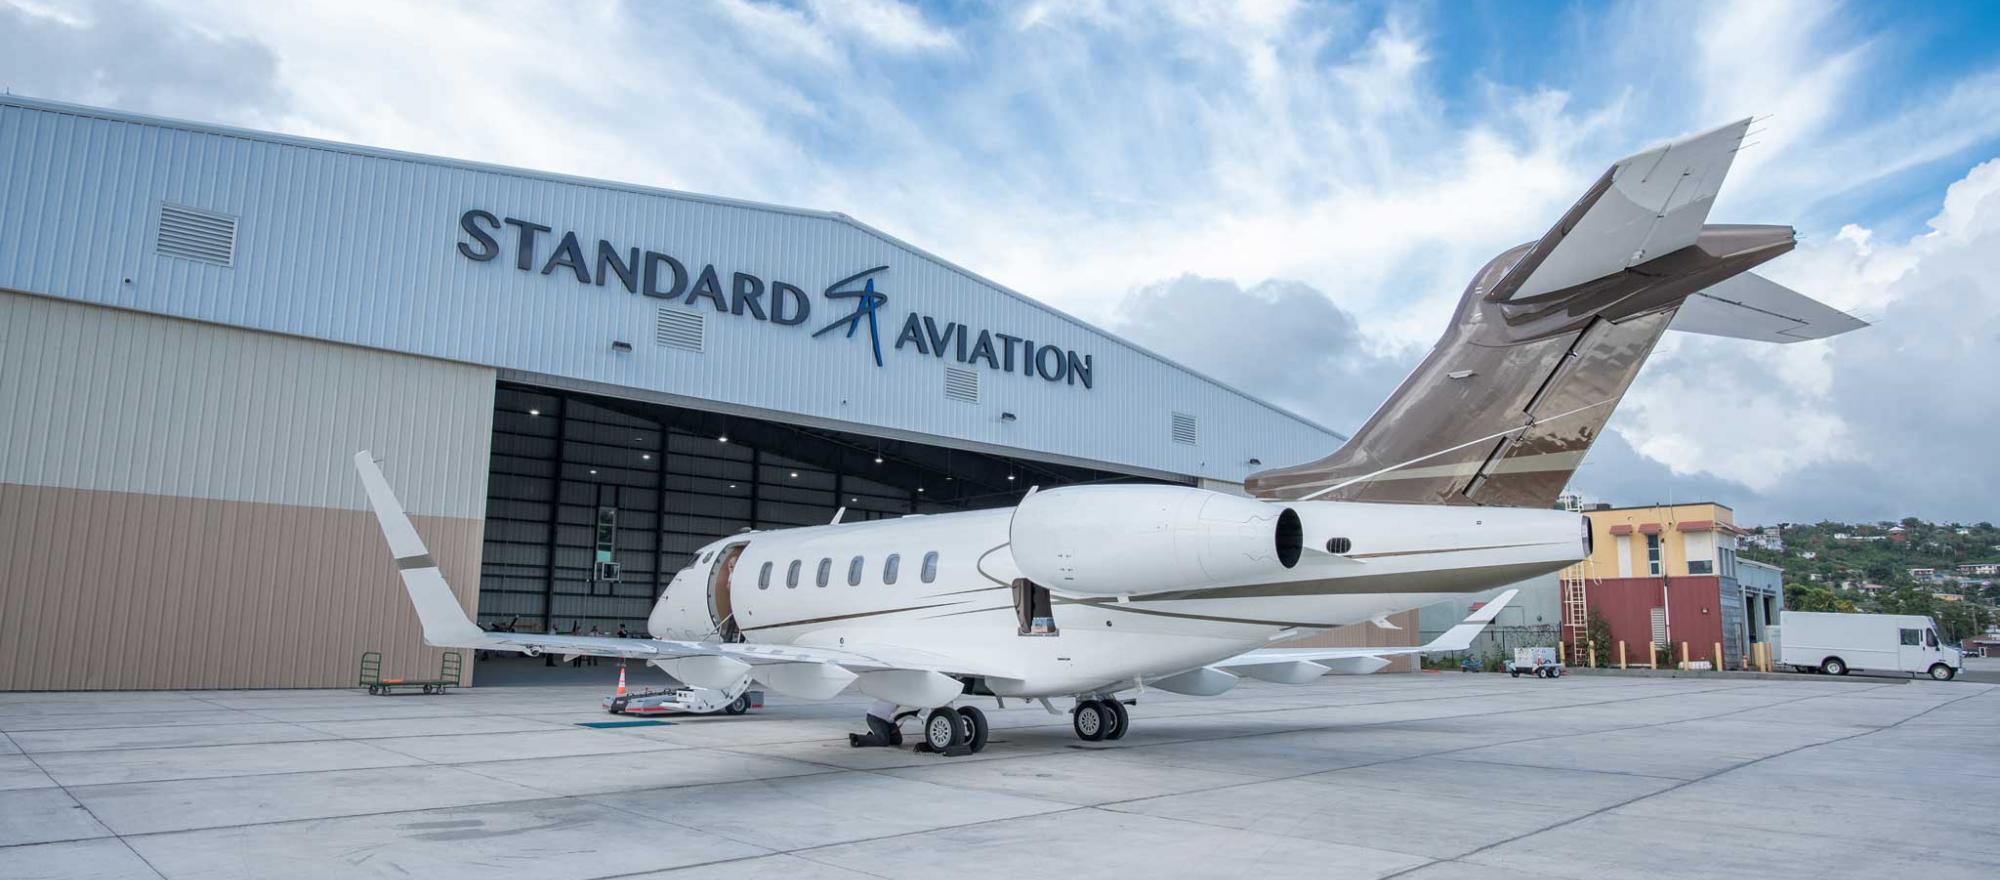 New Standard Aviation hangar at TIST